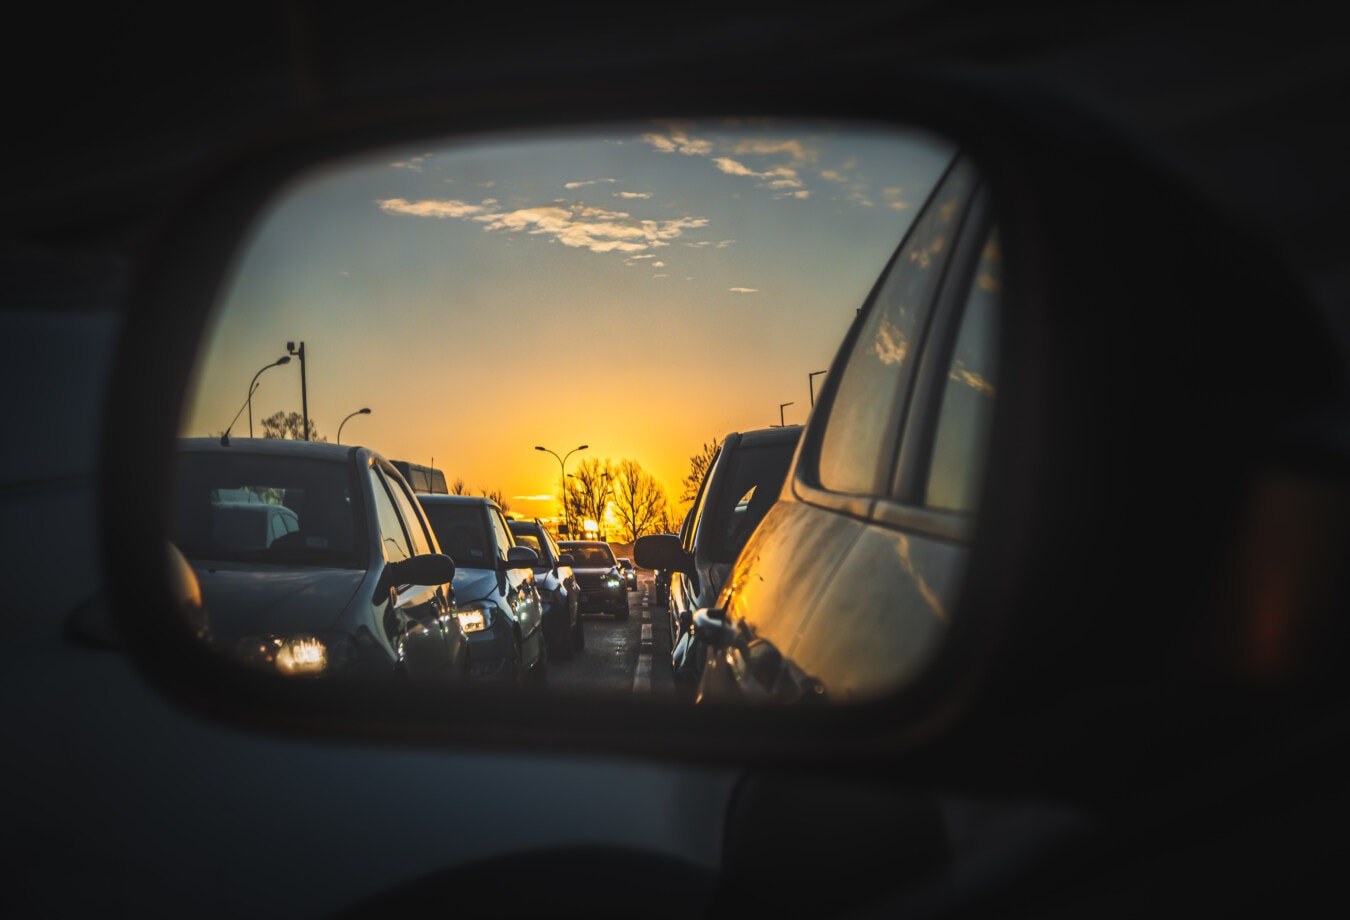 traffic jam, mirror, road, cars, evening, car, automobile, vehicle, sunset, transportation